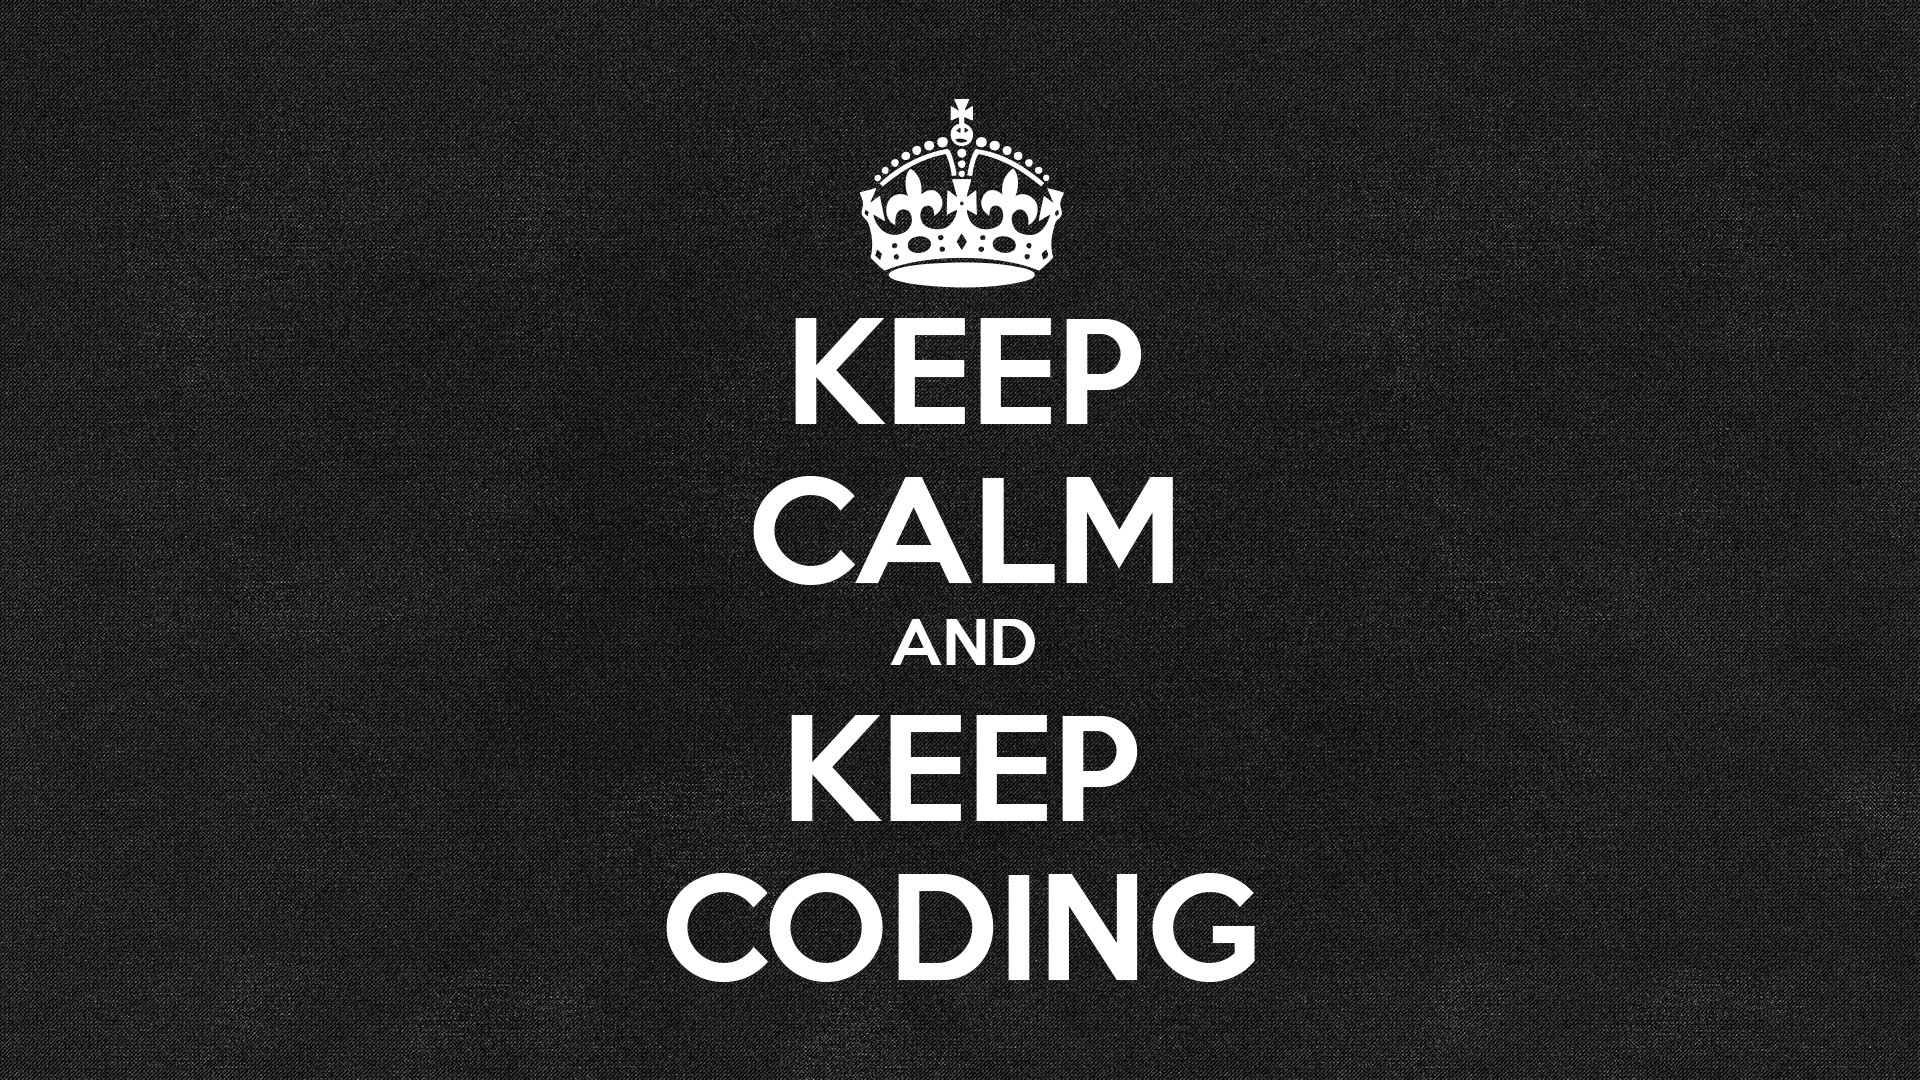 Keep calm coding 16 9